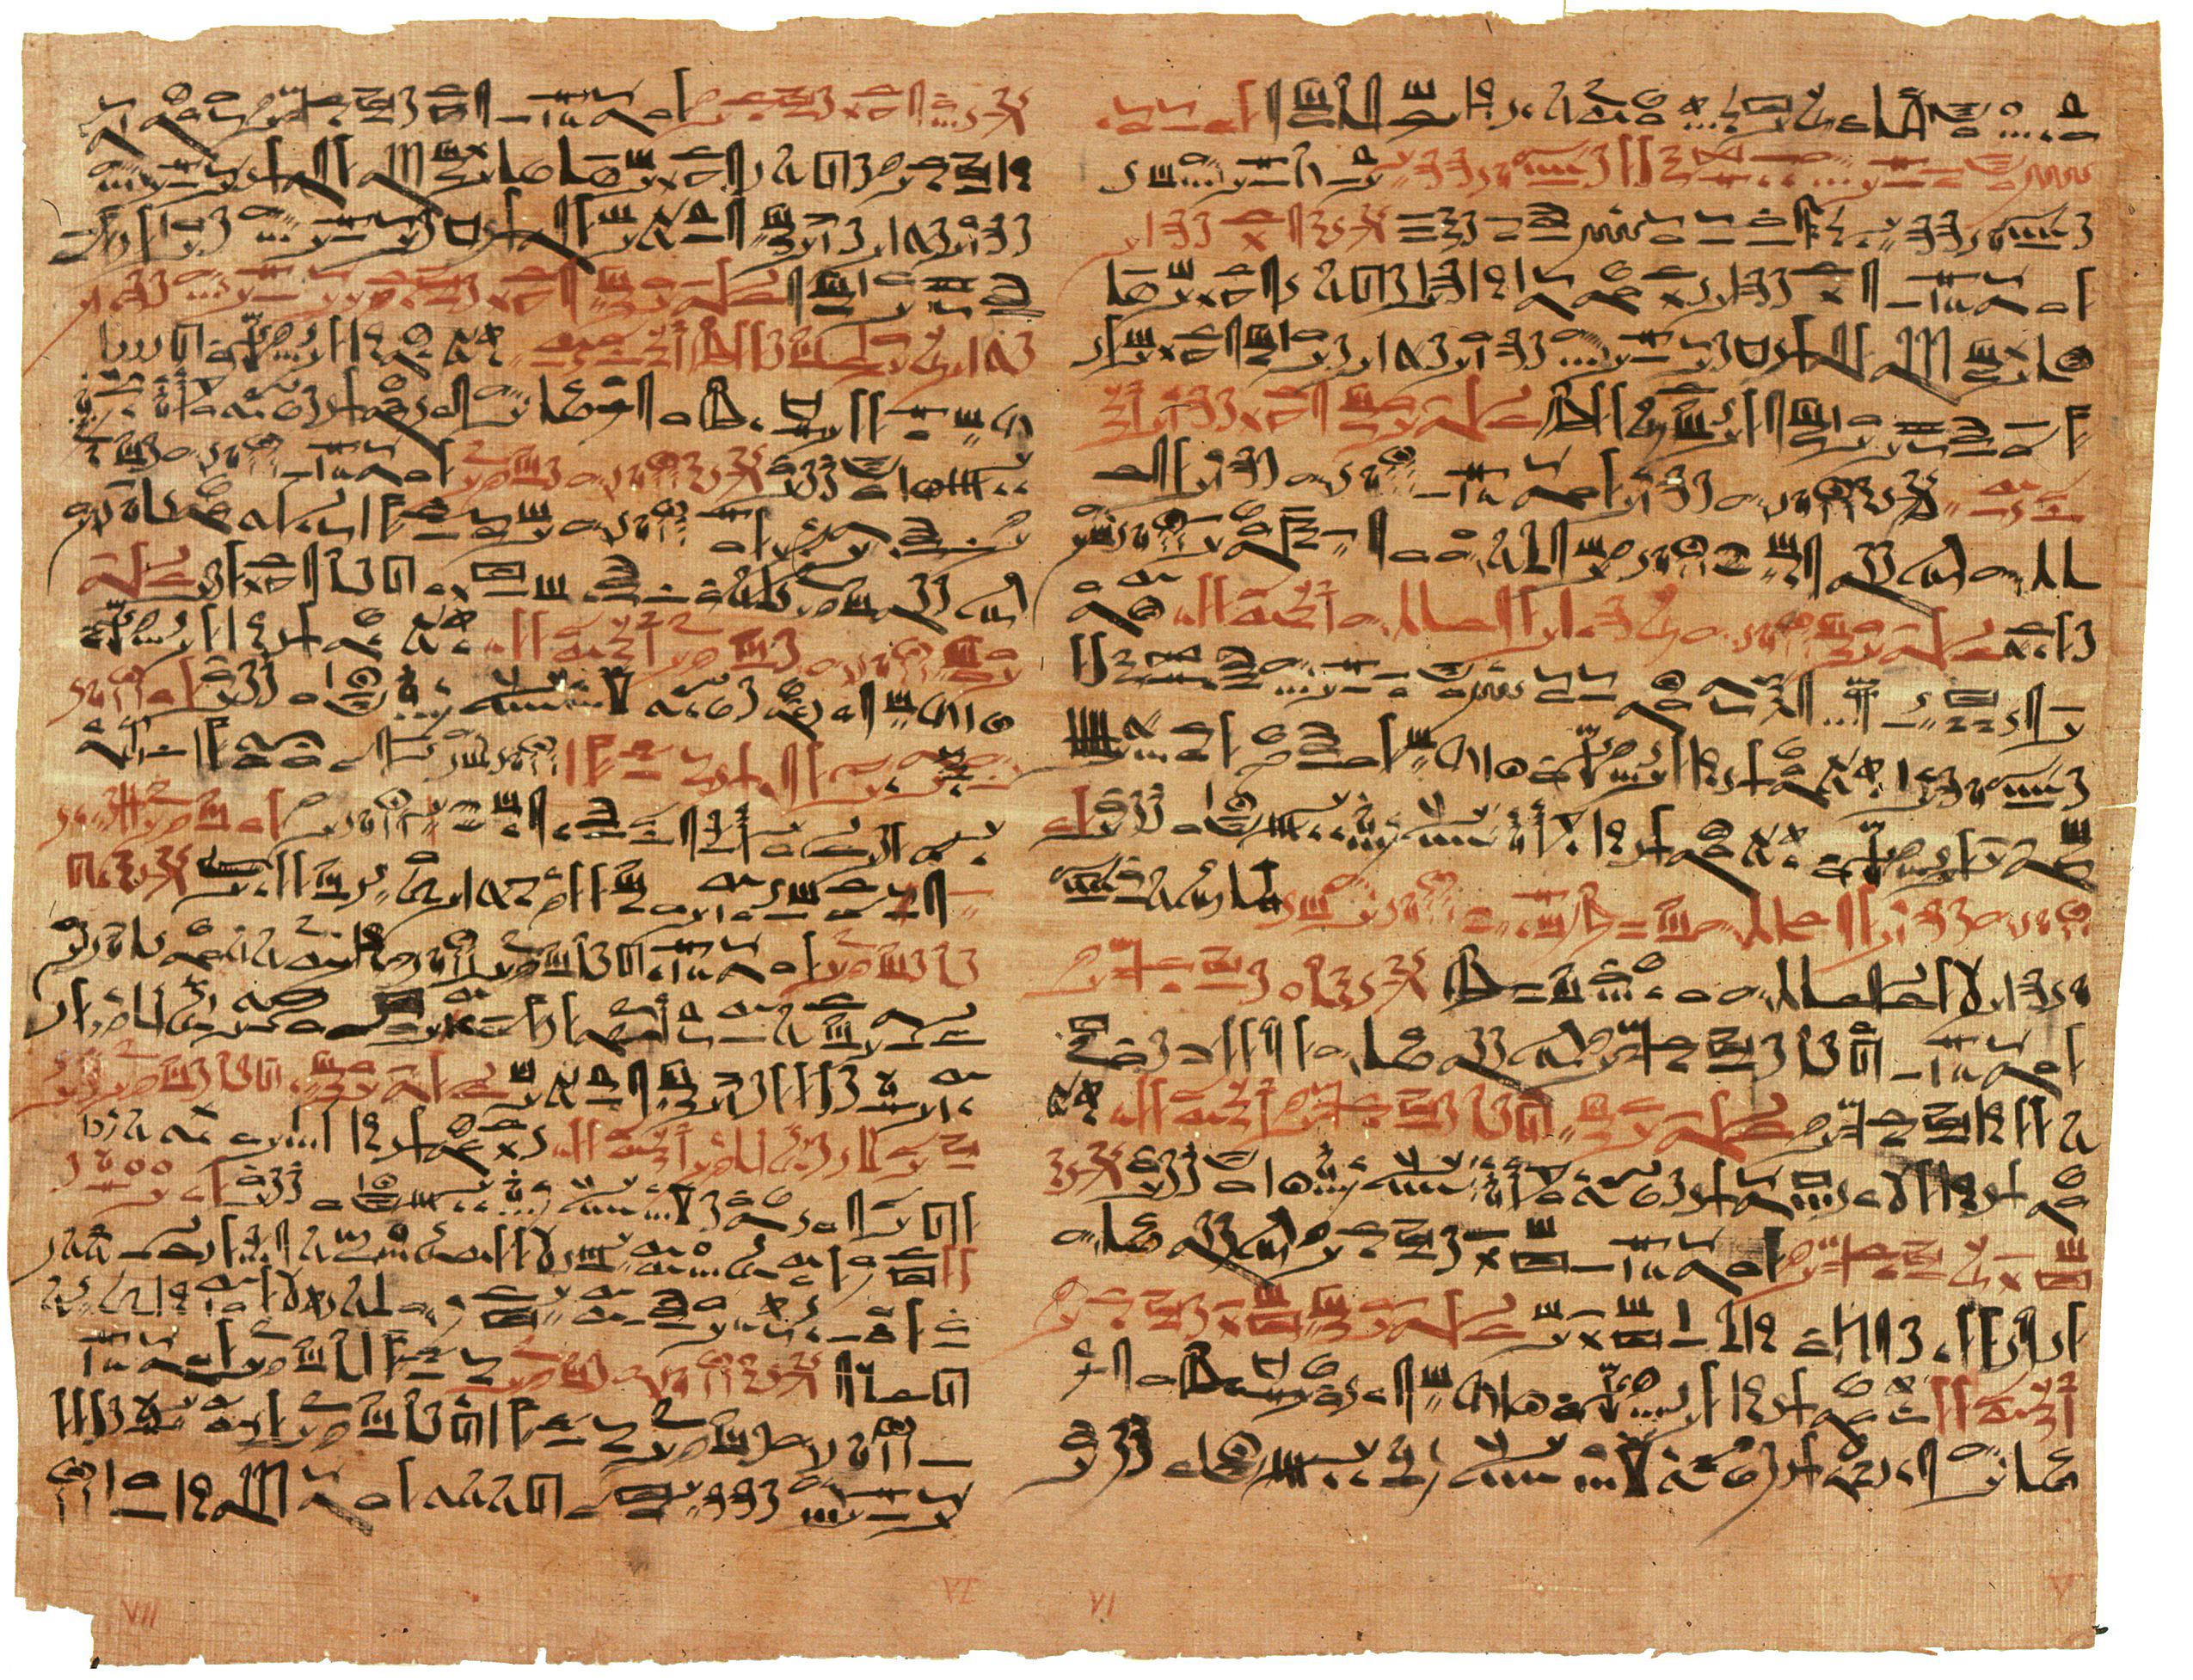 Edwin Smith Papyrus v2